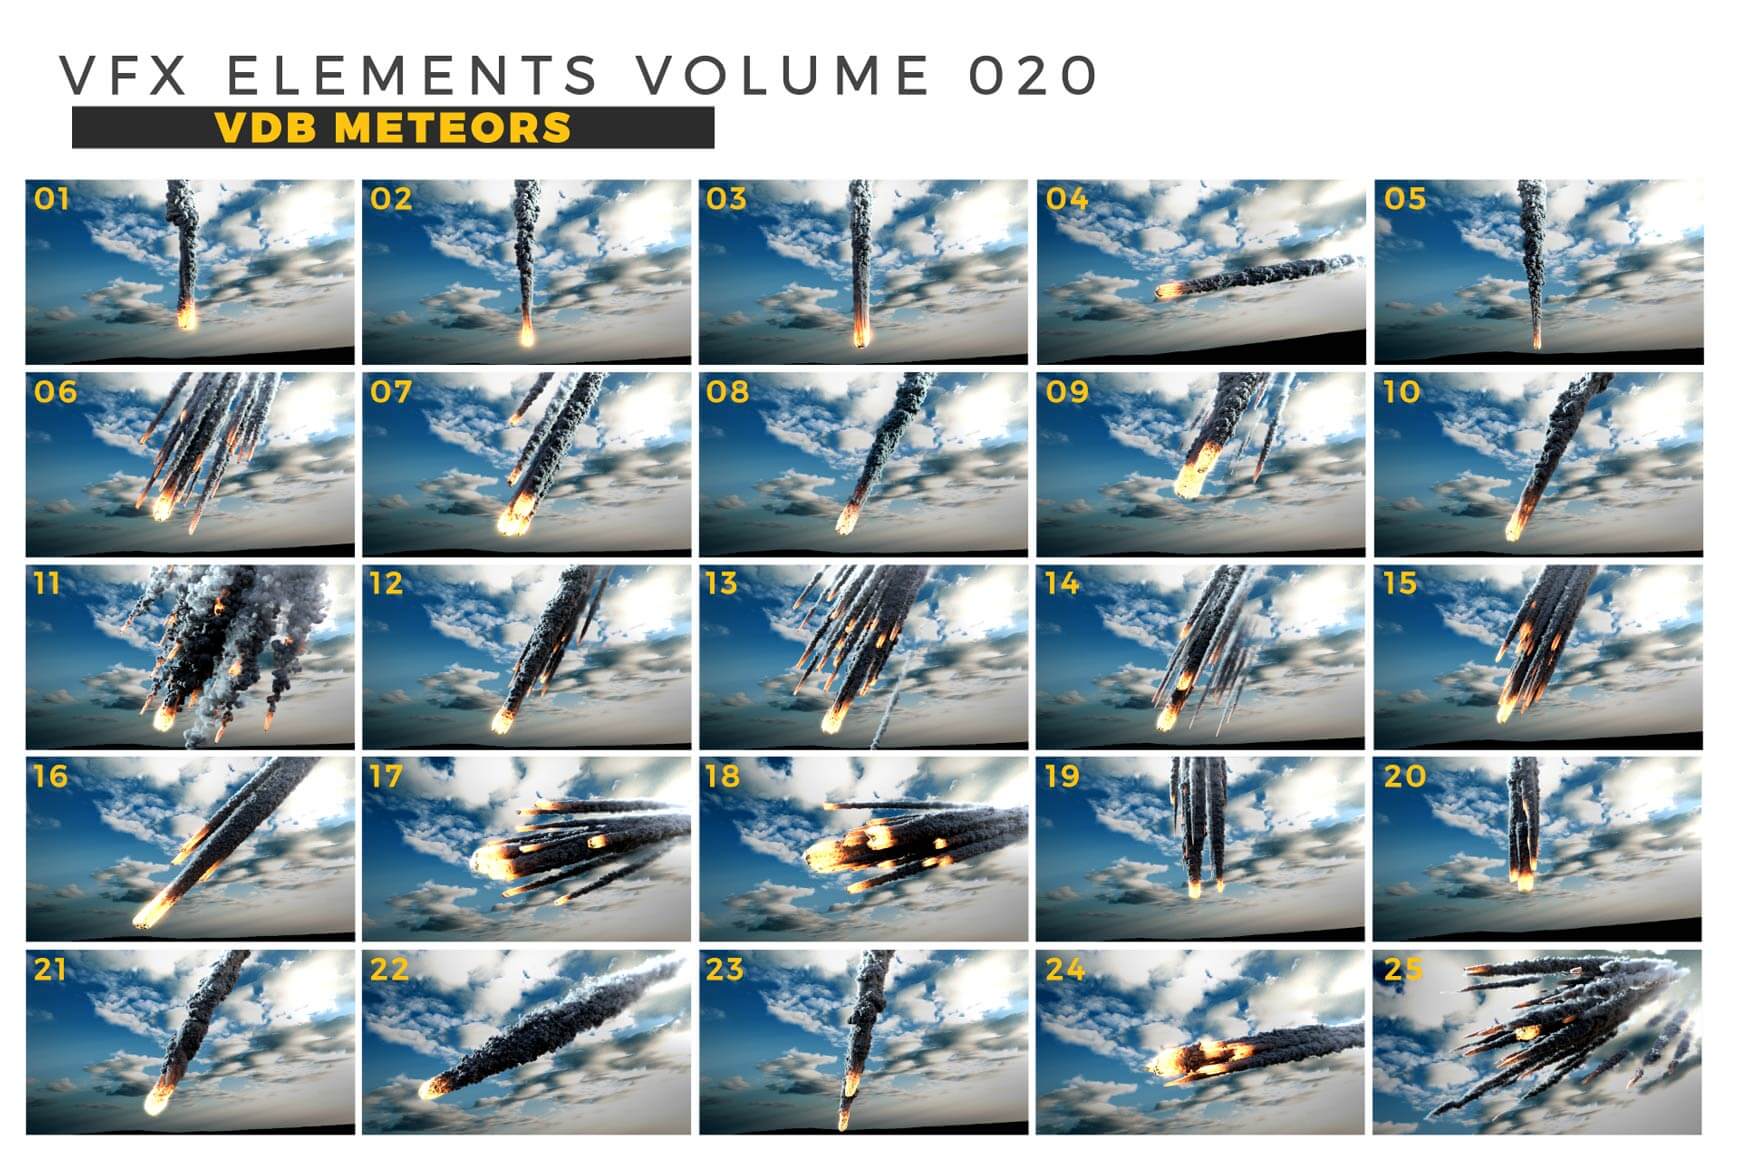 VFX Elements VDB Meteor Showers Guide